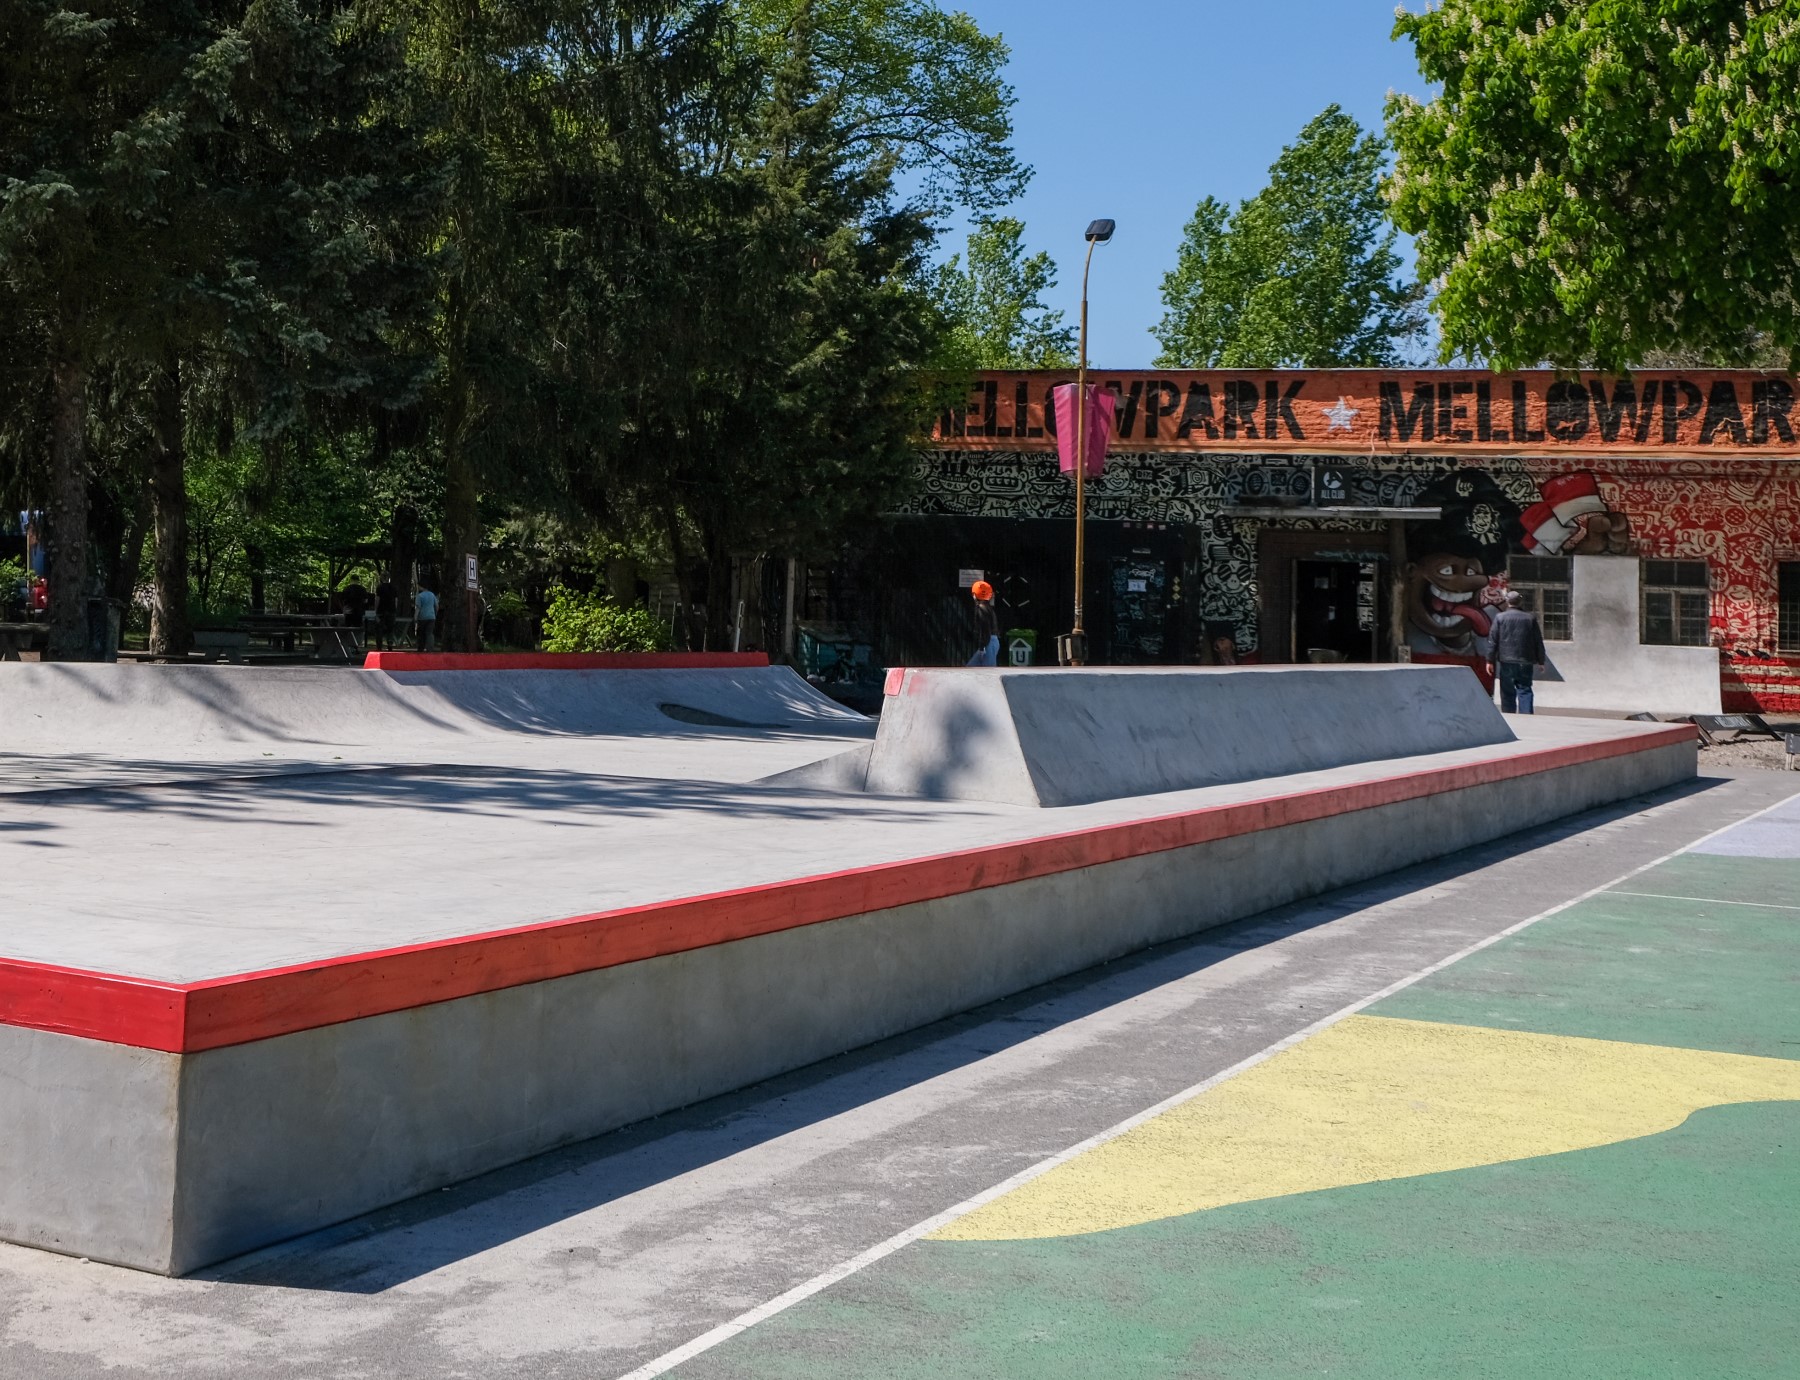 Skateanlage Mellowpark in Berlin